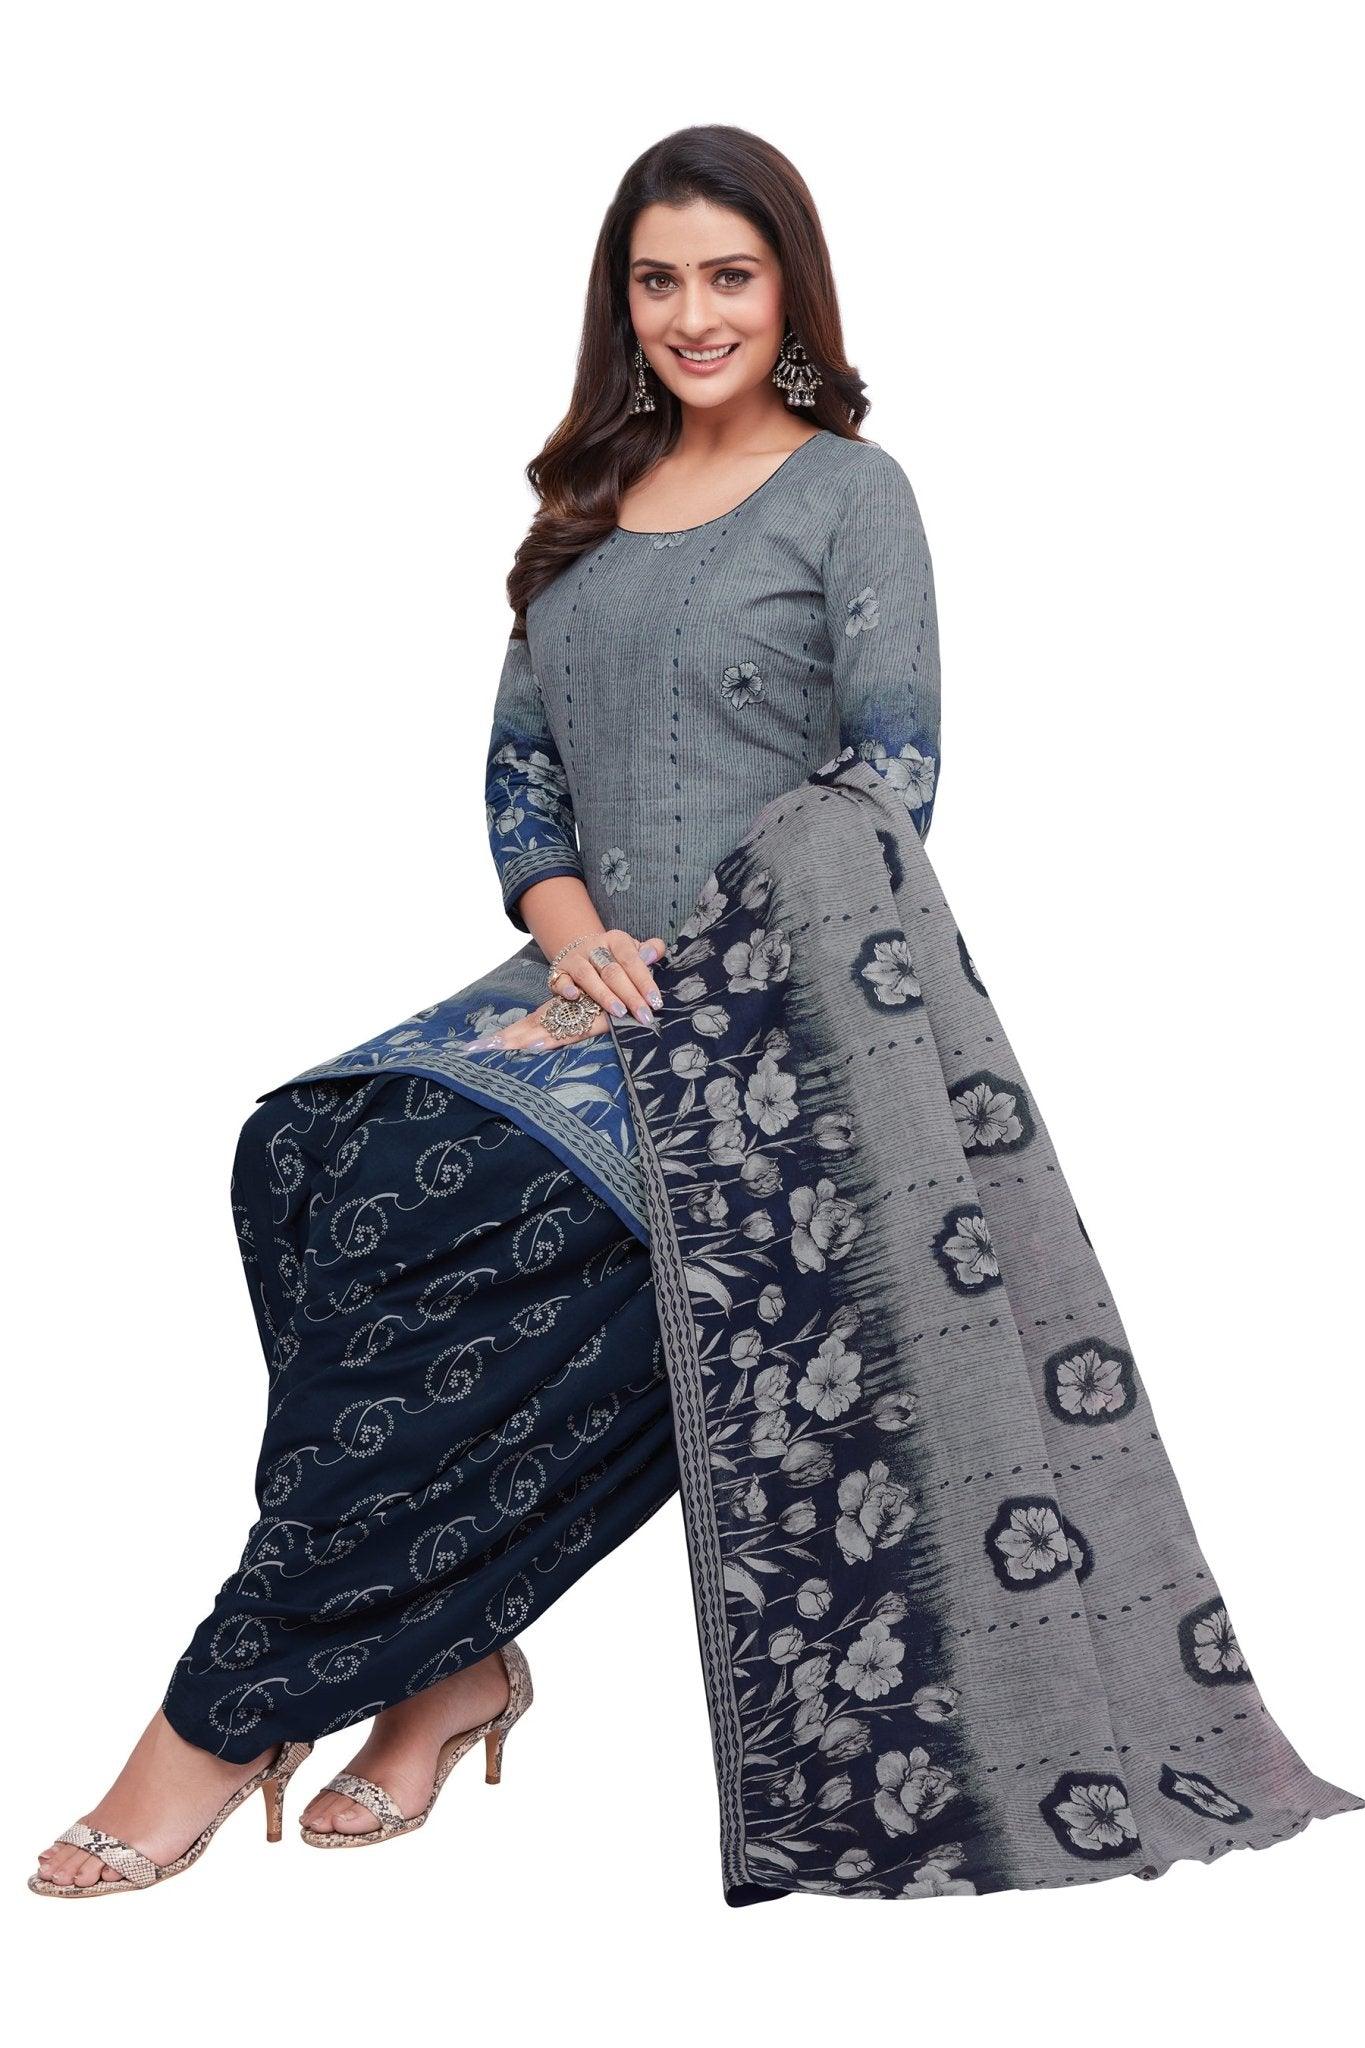 Medium Grey Top with Dark Blue Bottom and Dupatta. Soft Cotton Patiala Dress Material Sets. - Bavis Clothing